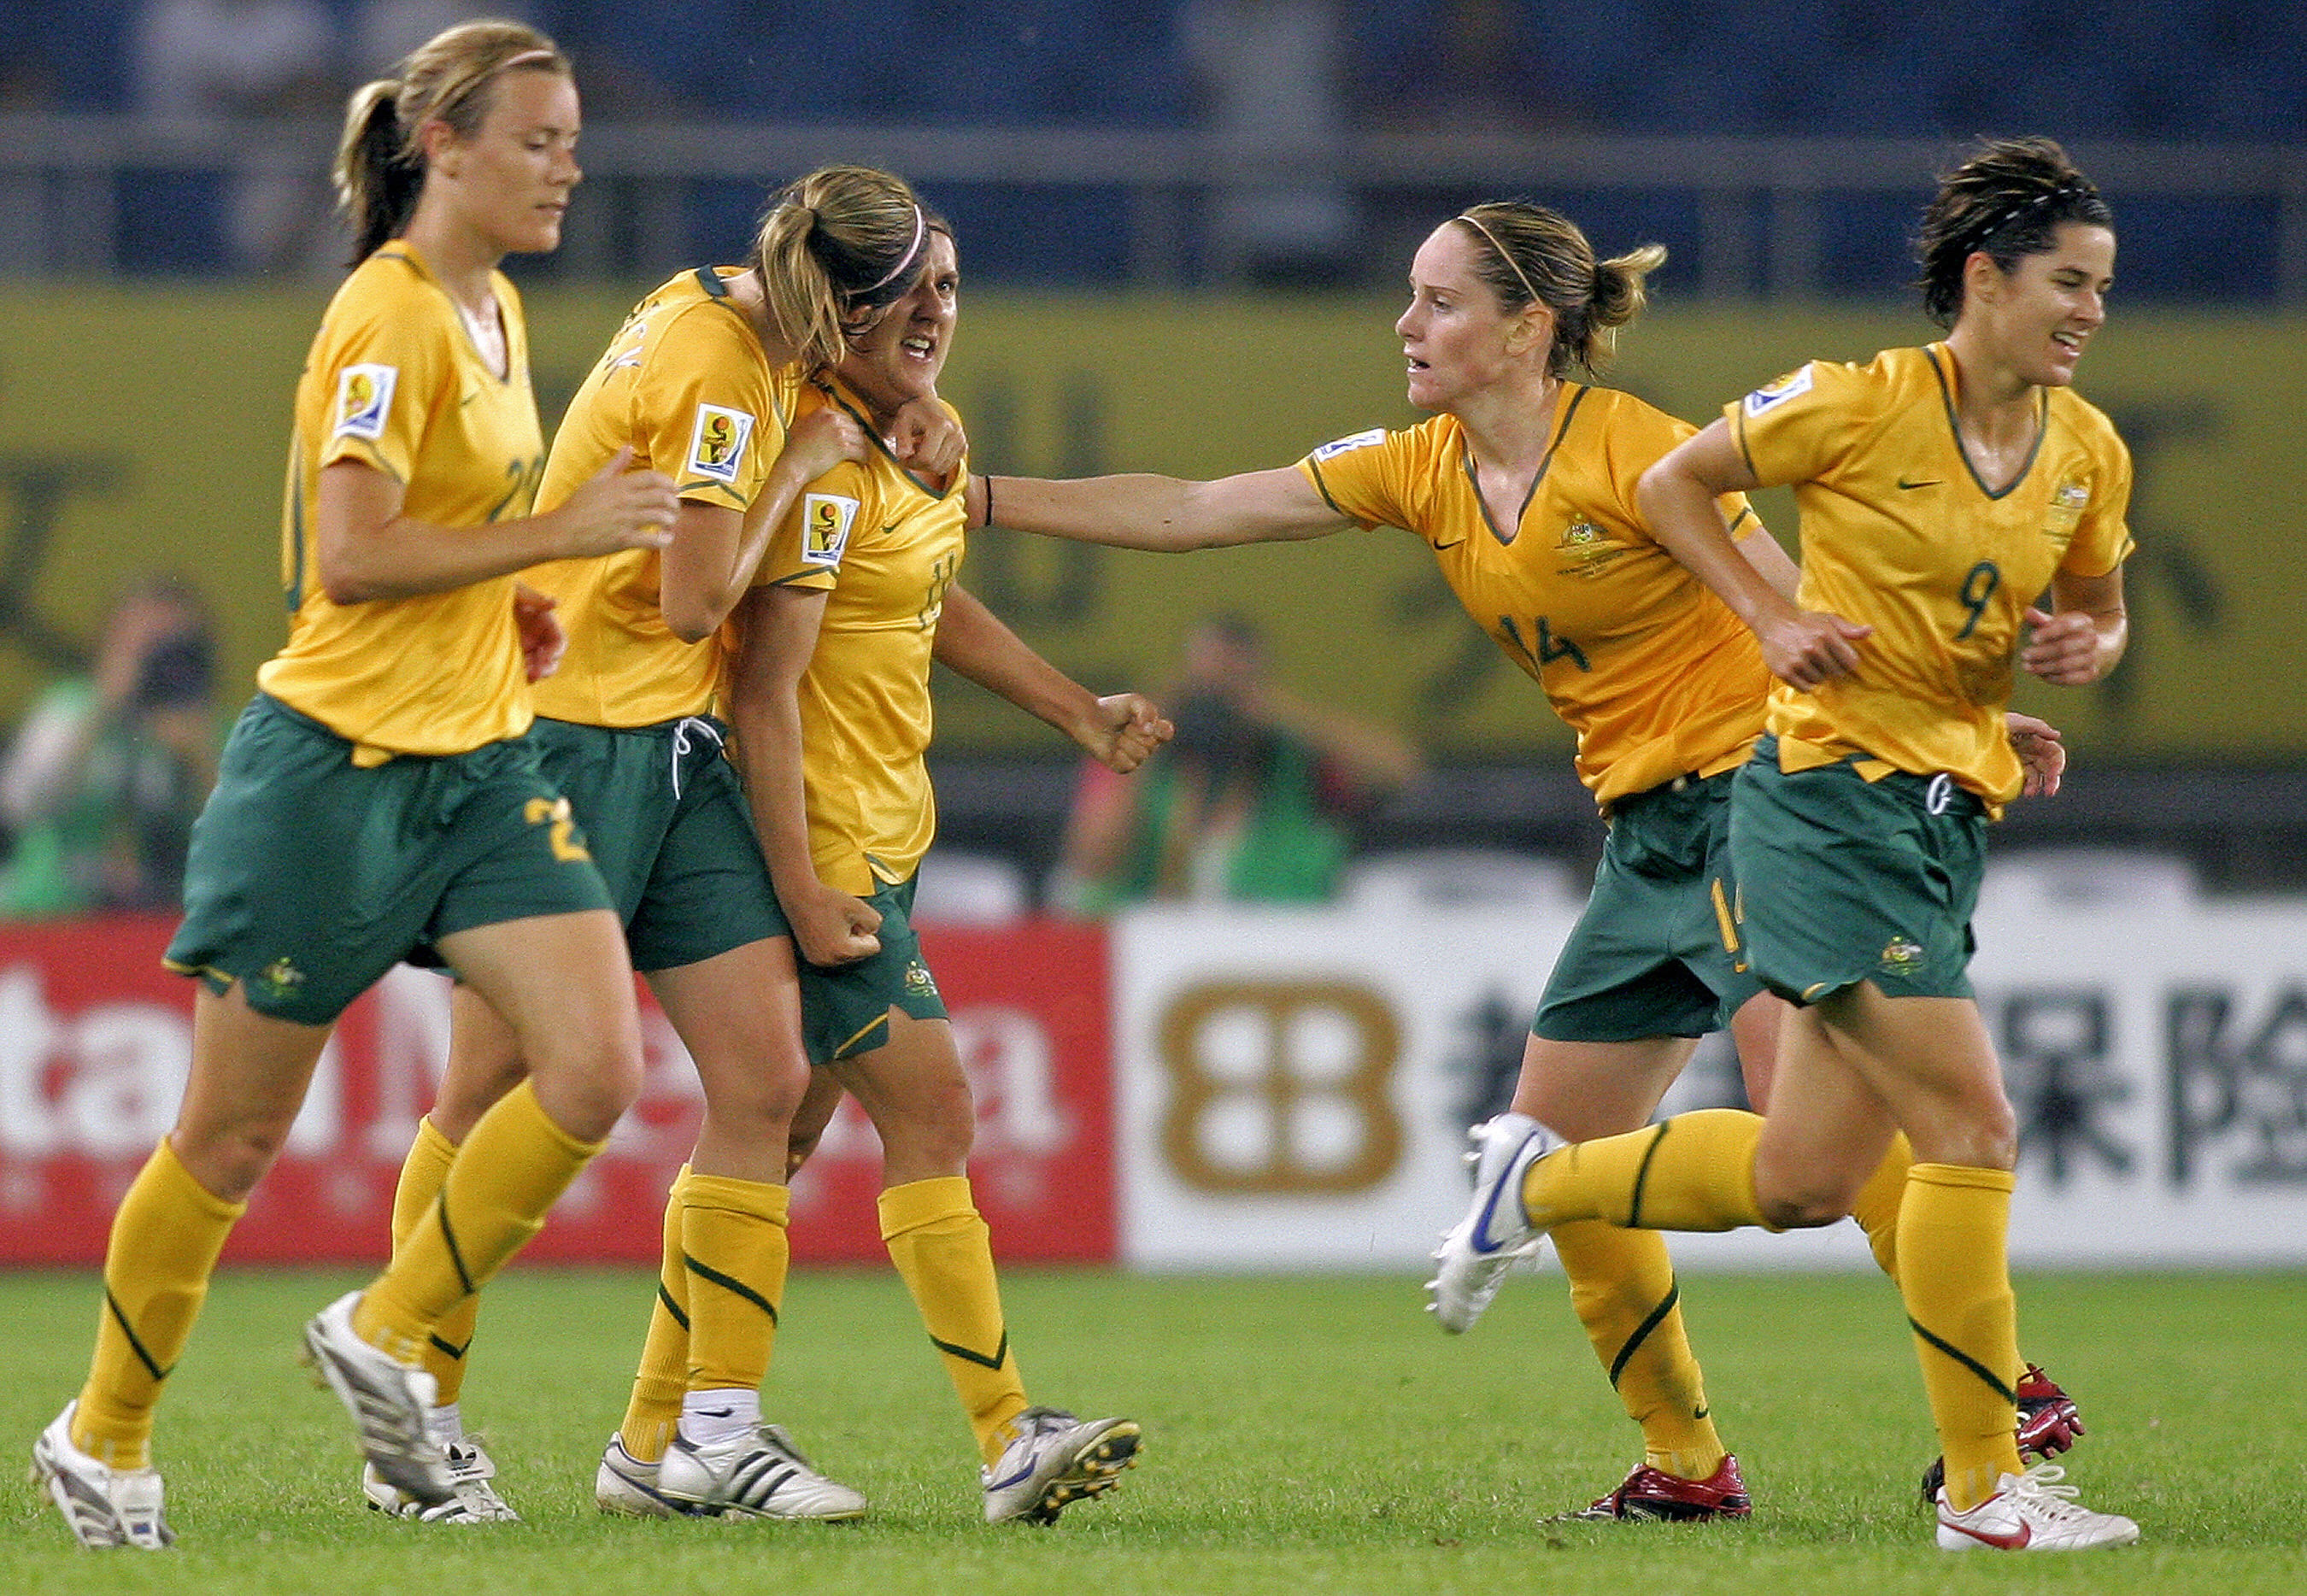 Matilda' Australia's word of the year after Women's World Cup run -  SportsDesk